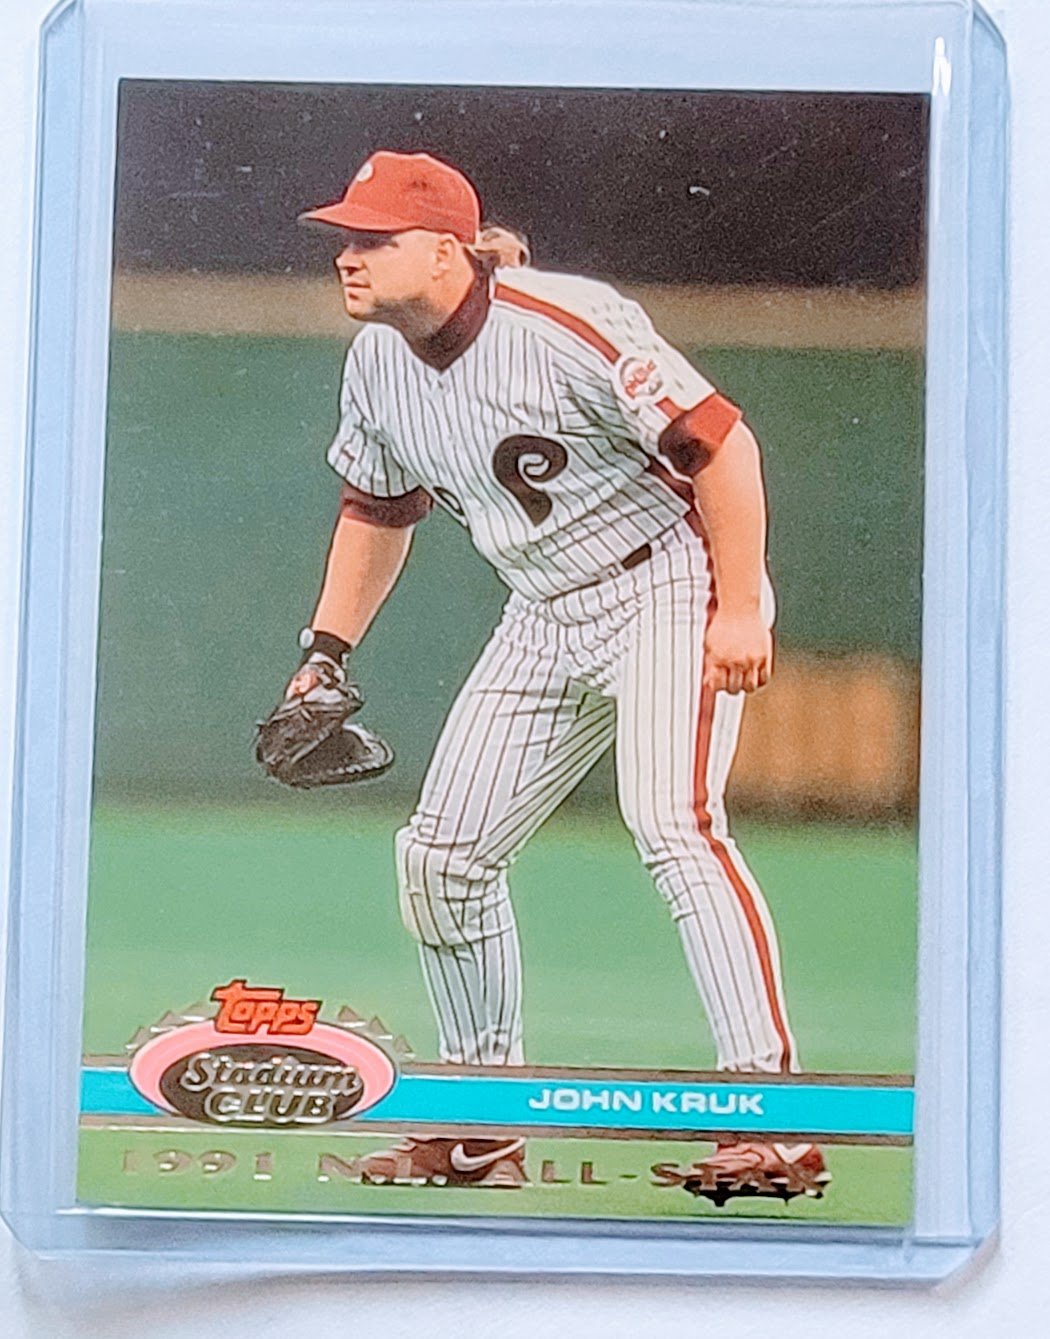 1992 Topps Stadium Club Dome John Kruk 1991 All Star MLB Baseball Trad